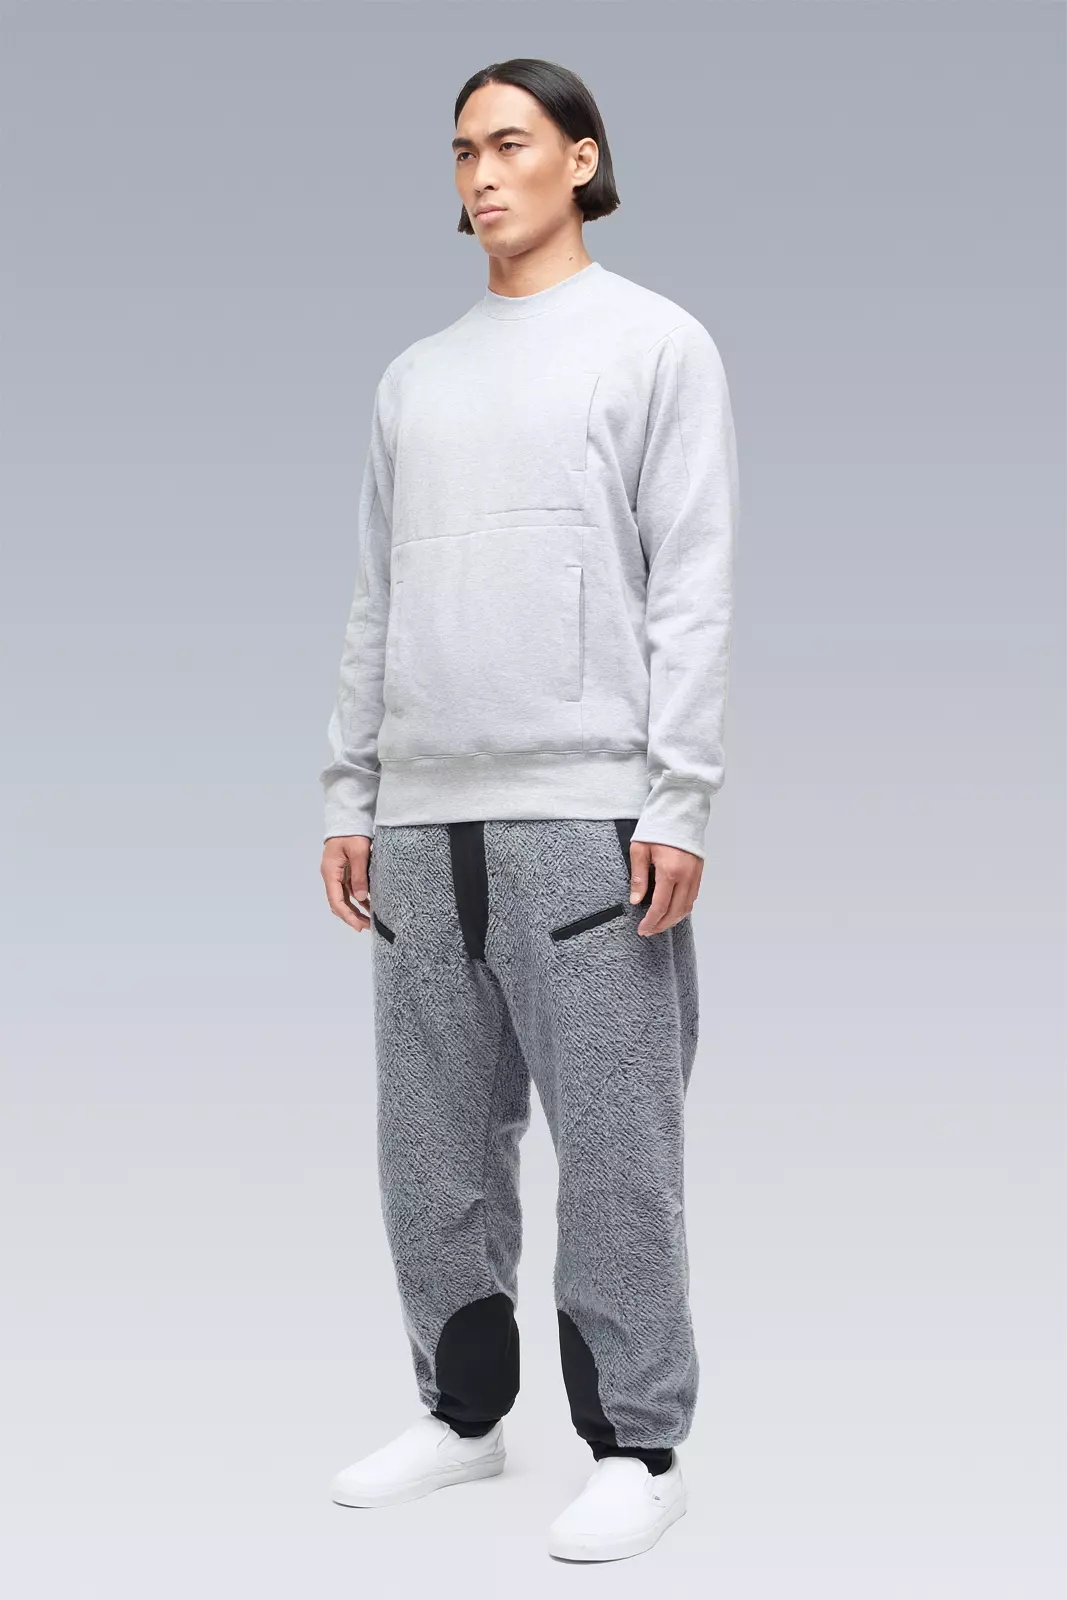 S14-BR Cotton Crewneck Sweatshirt Gray Melange - 5